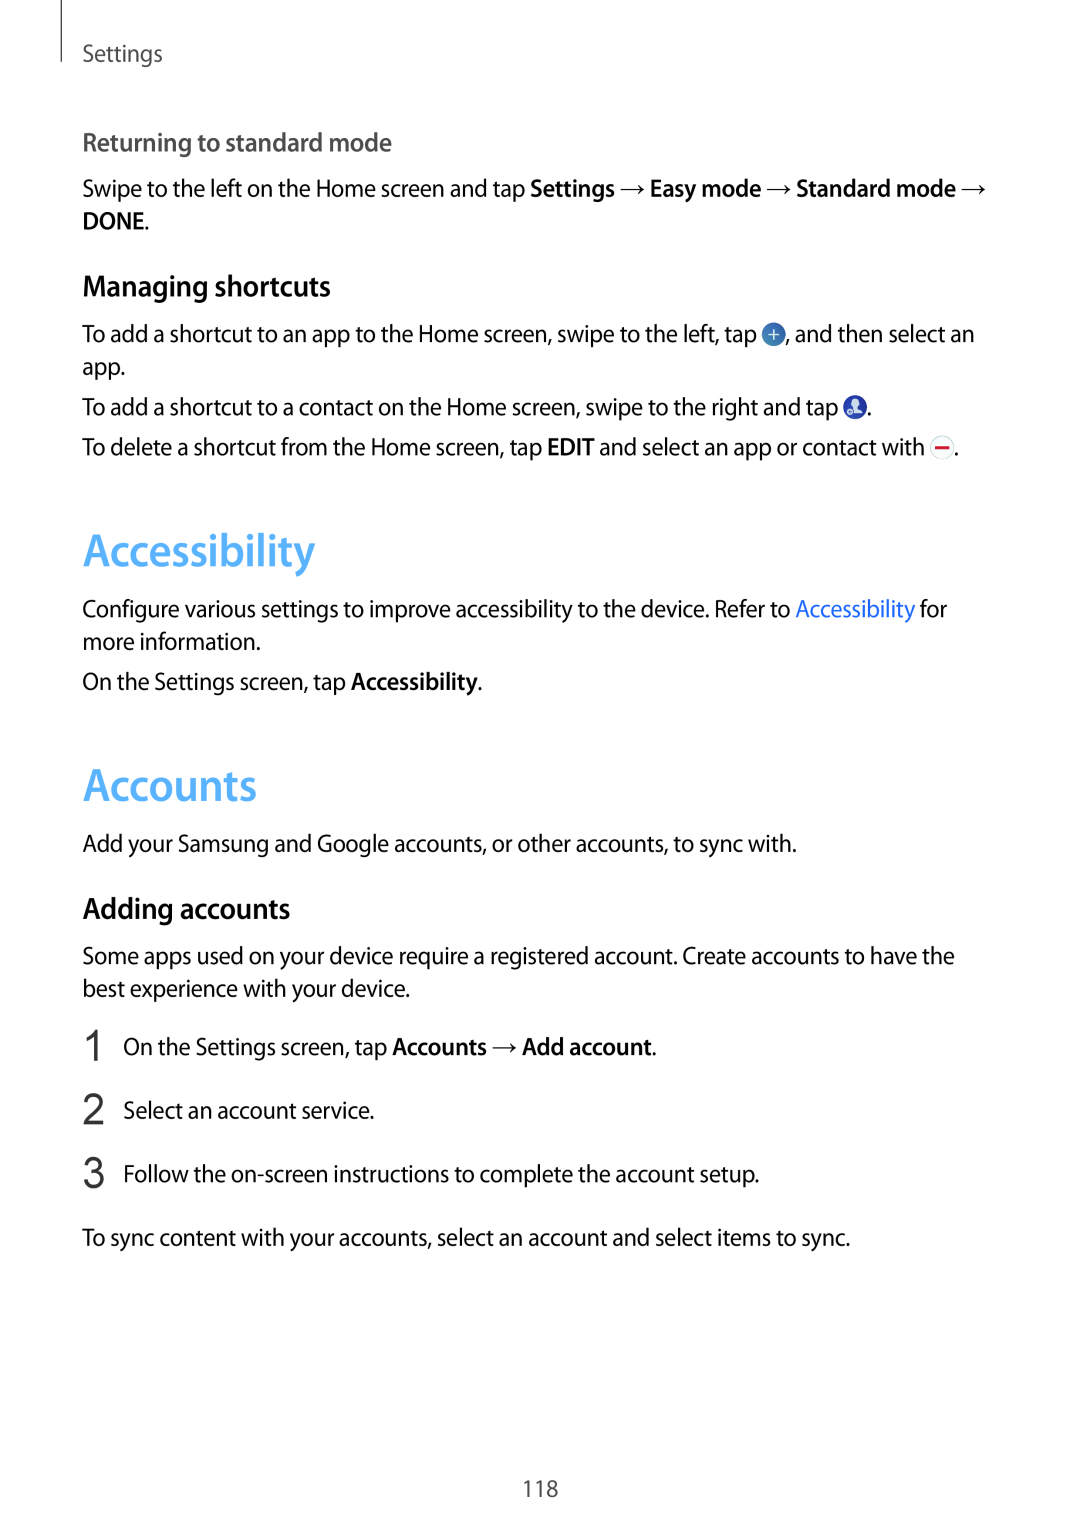 Samsung SM-G920FZBASEB Accessibility, Accounts, Managing shortcuts, Adding accounts, Returning to standard mode, Settings 